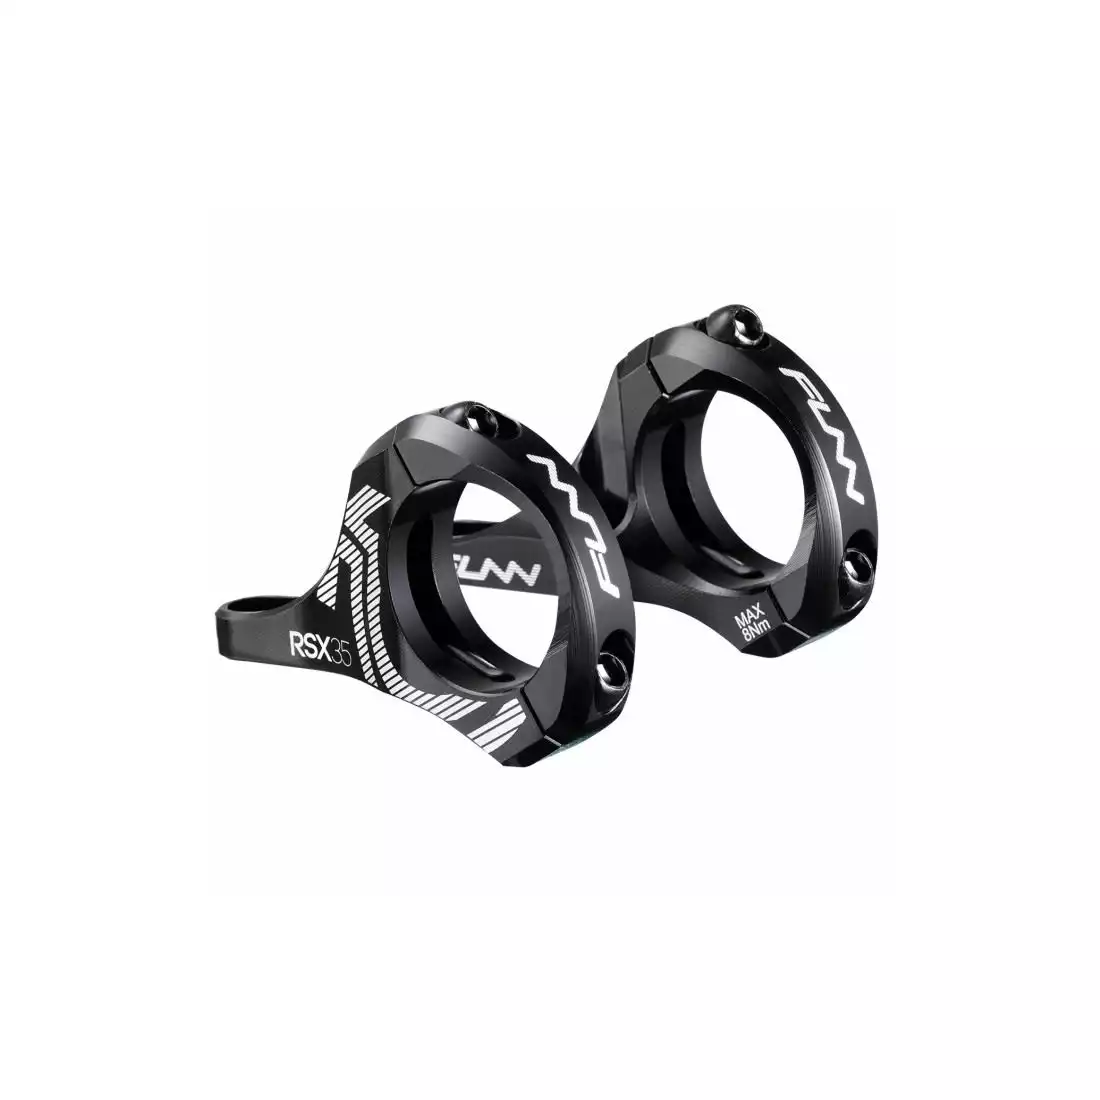 FUNN RSX III bicycle handlebar bracket 45-50/35/20 mm dedicated to shock absorbers ROCK SHOCK BOXXER